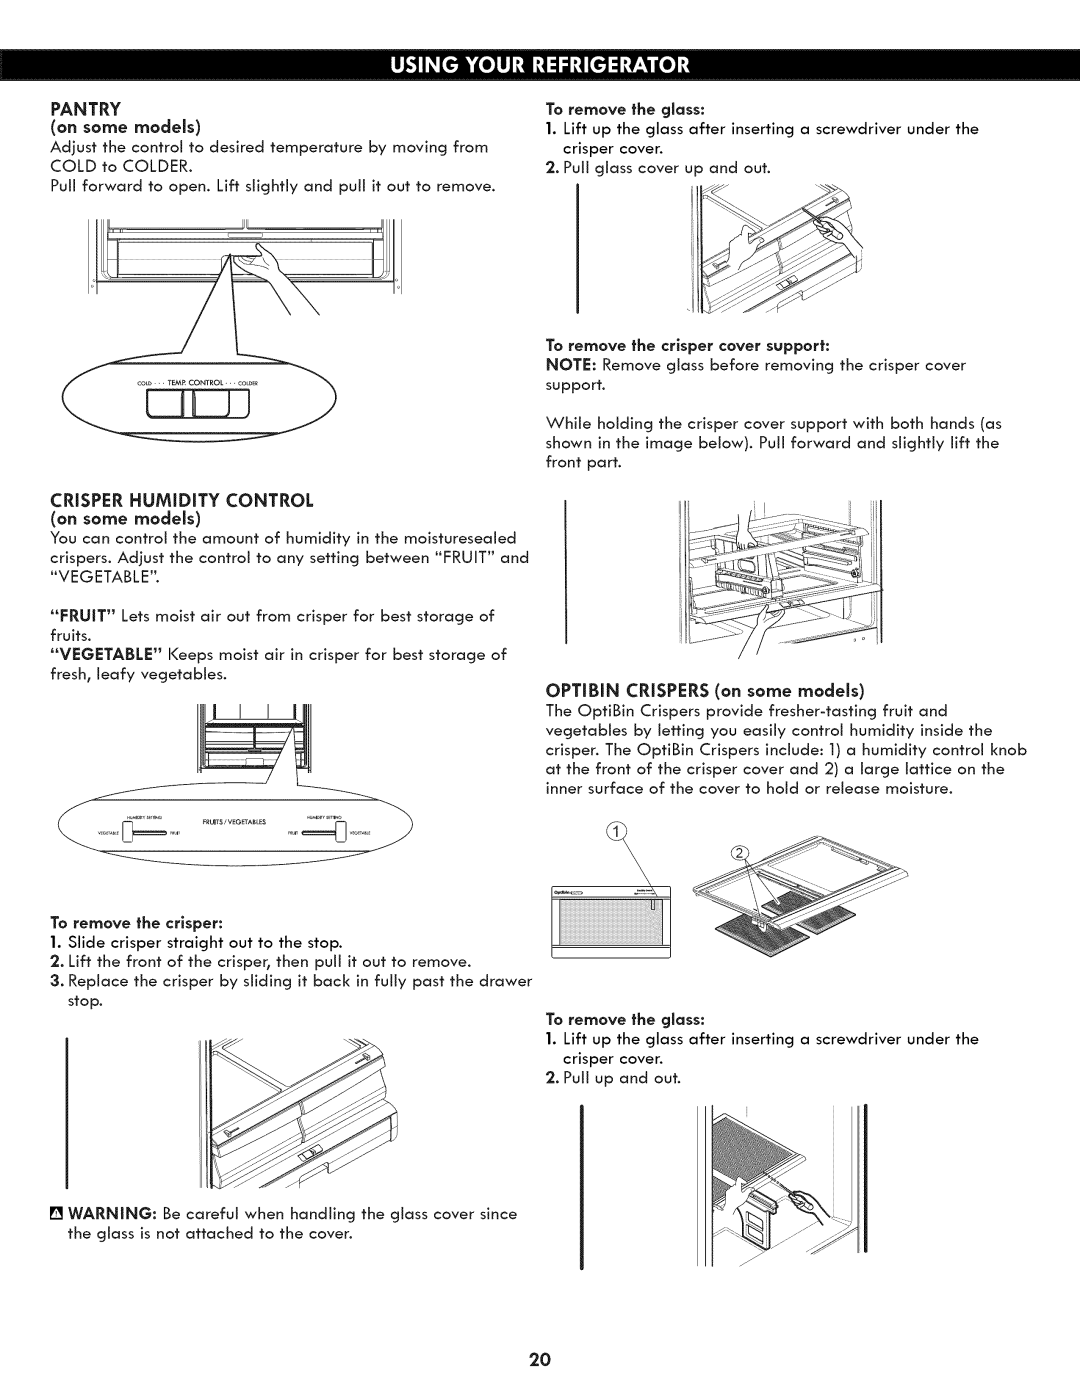 Kenmore 795.7130 manual Pantry, Crisper Humidity Control, OPTIBIN CRISPERS on some models 